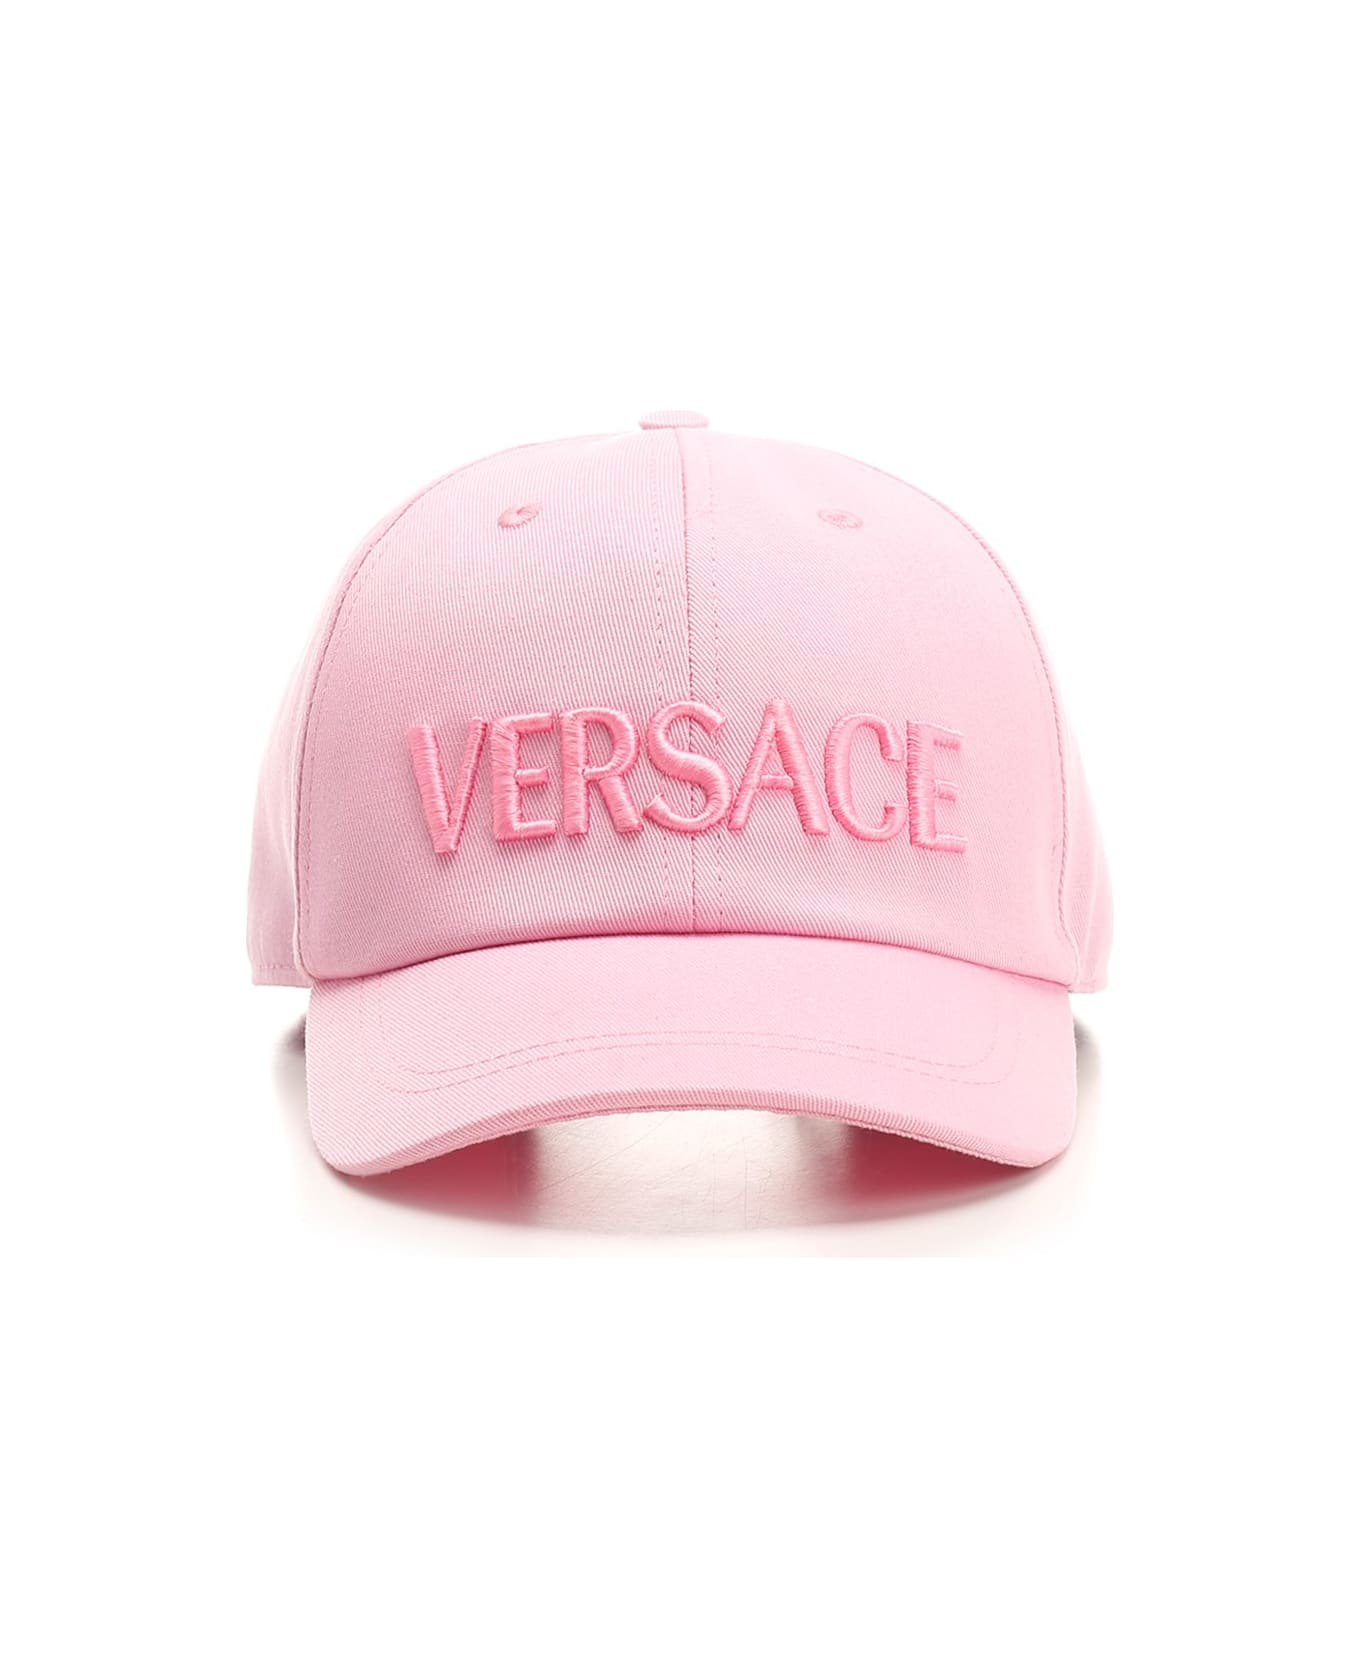 Versace Baseball Hat - PINK